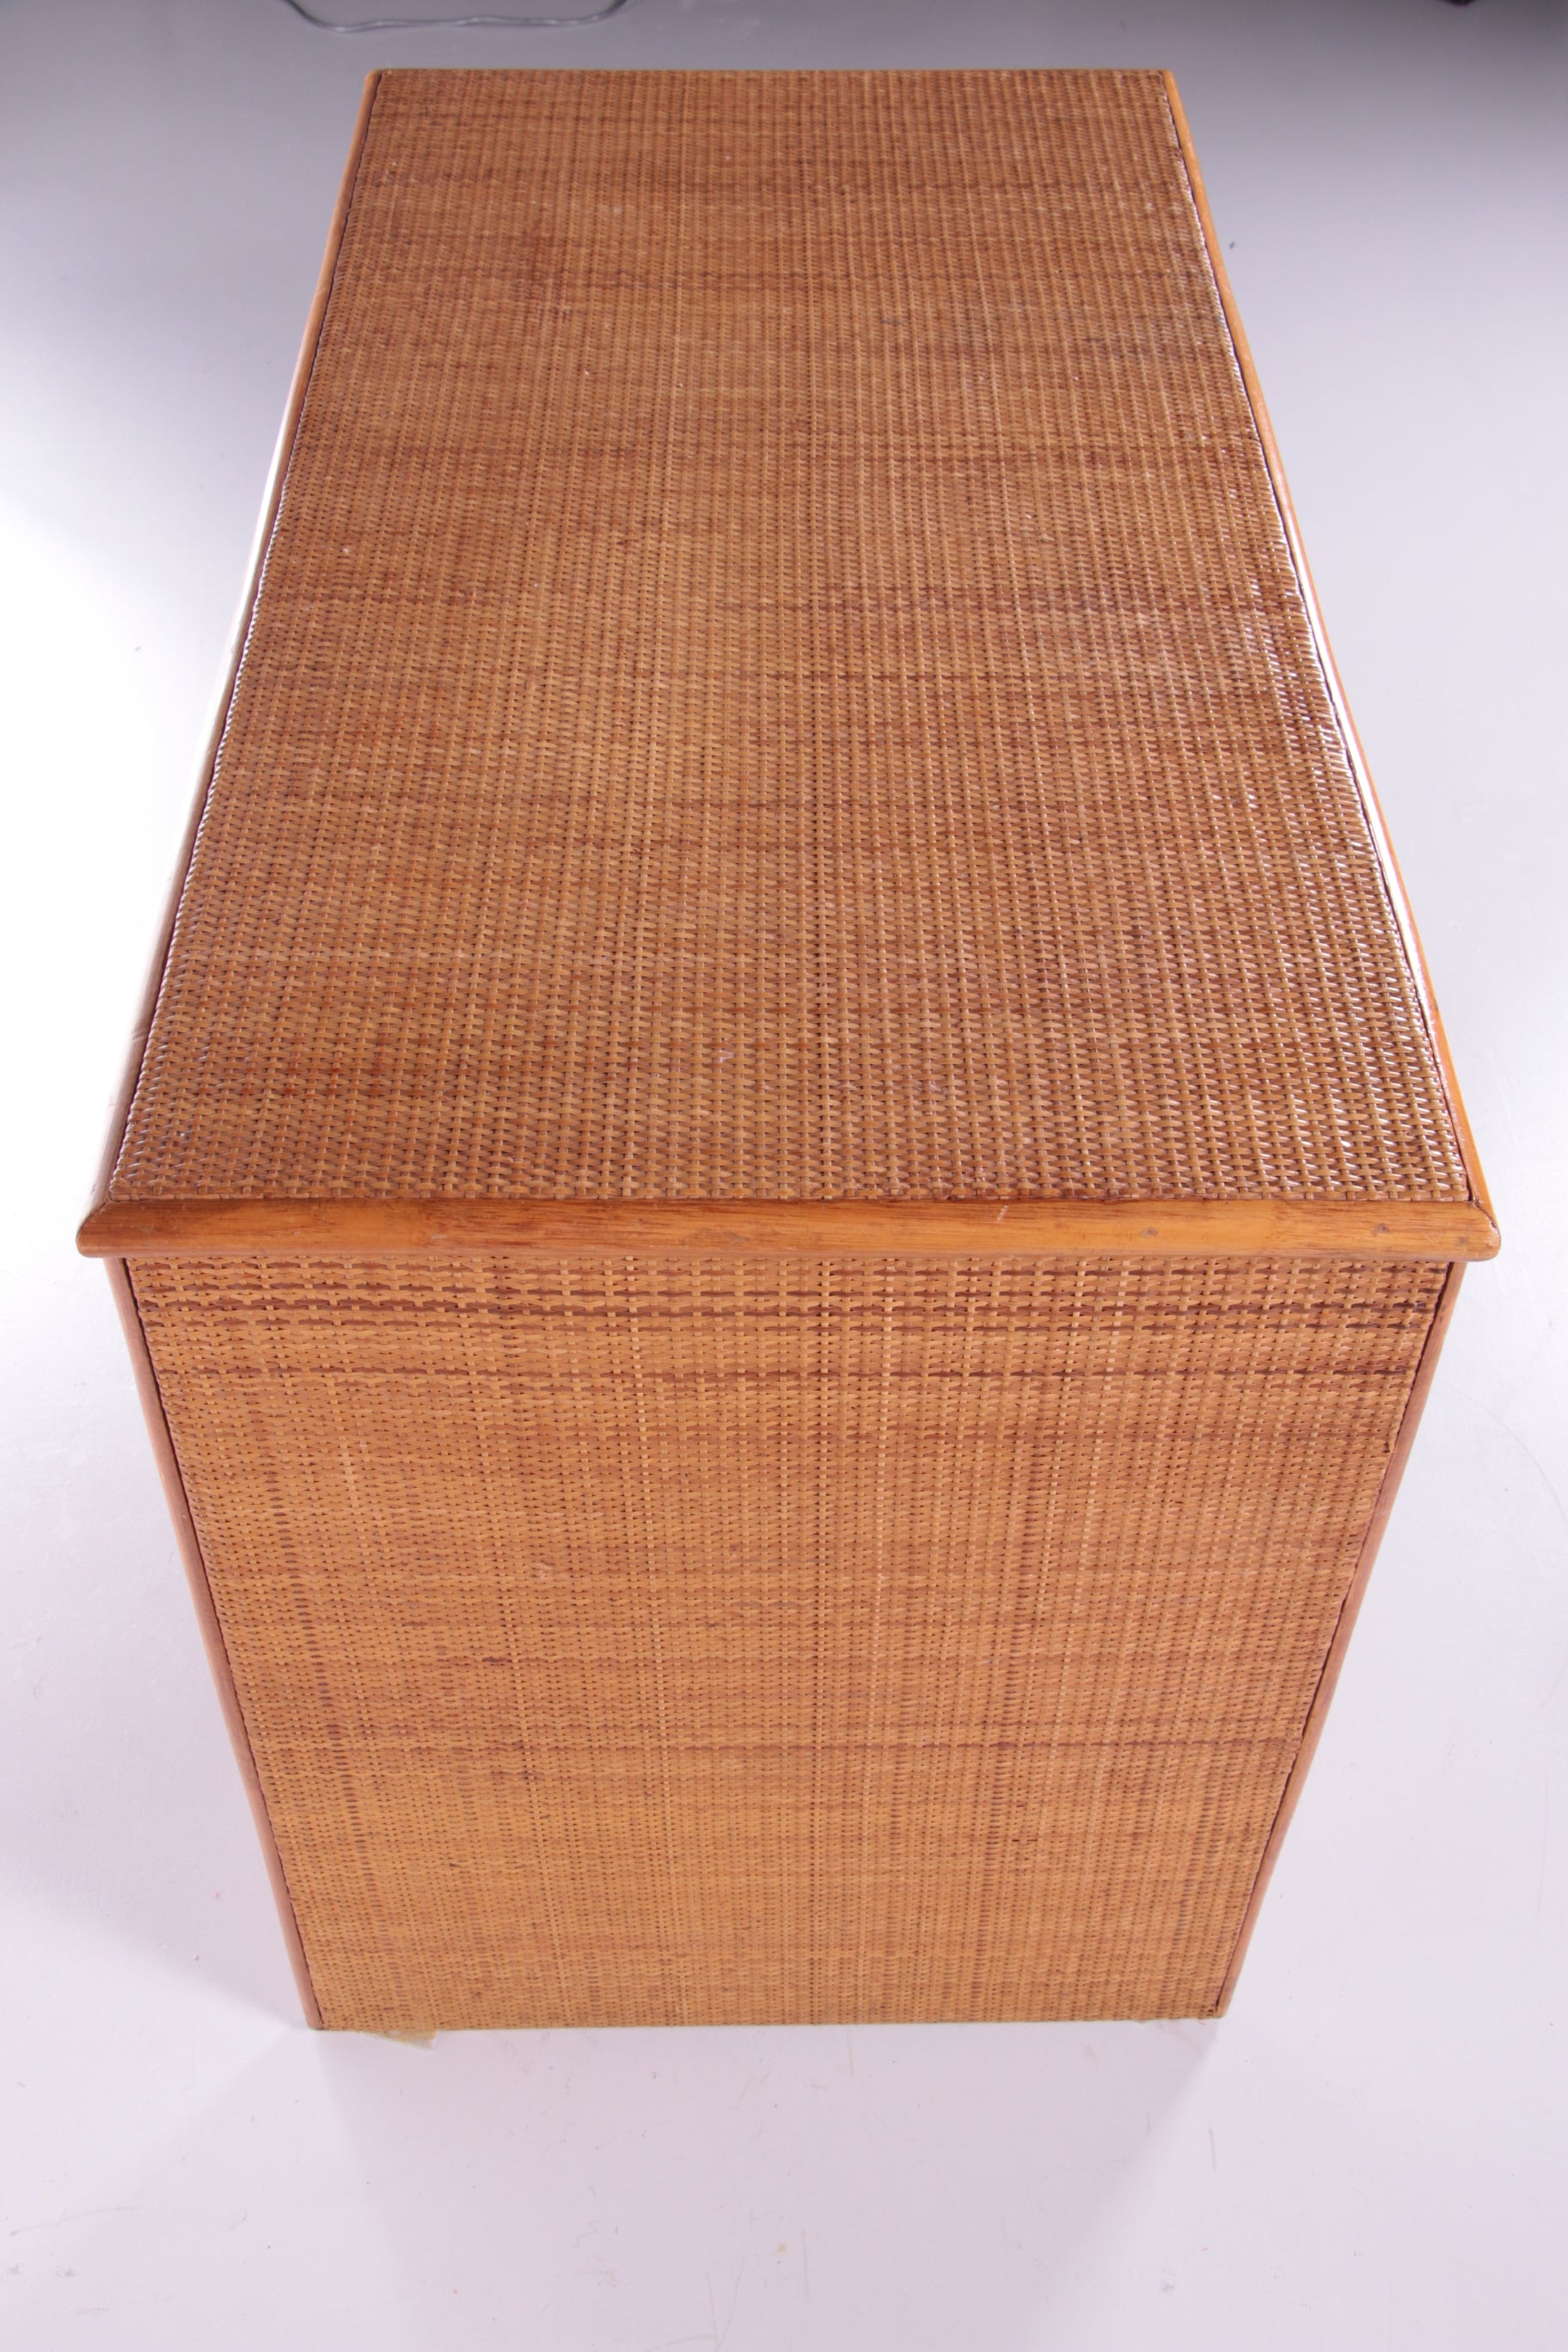 Bohemian stijl Bamboe Rotan bureau met lades uit Frankrijk jaren60